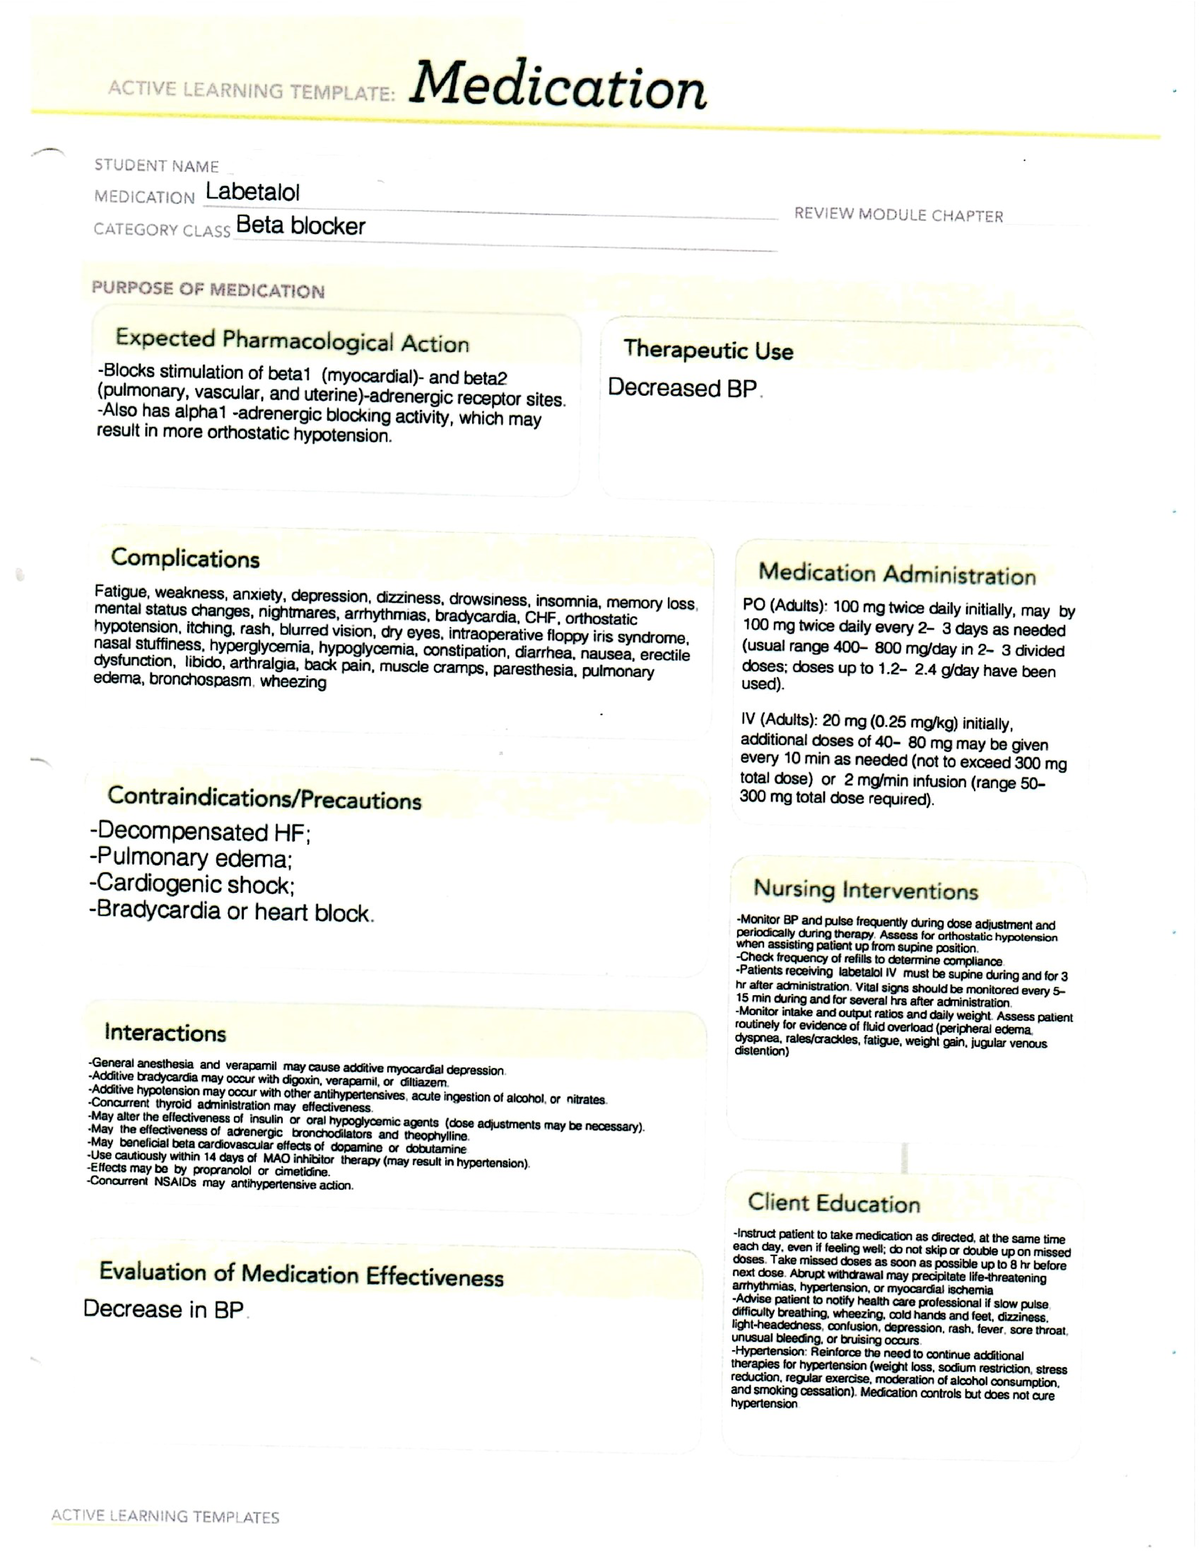 ATI Labetalol Medication Sheet PNSG 2240 Studocu